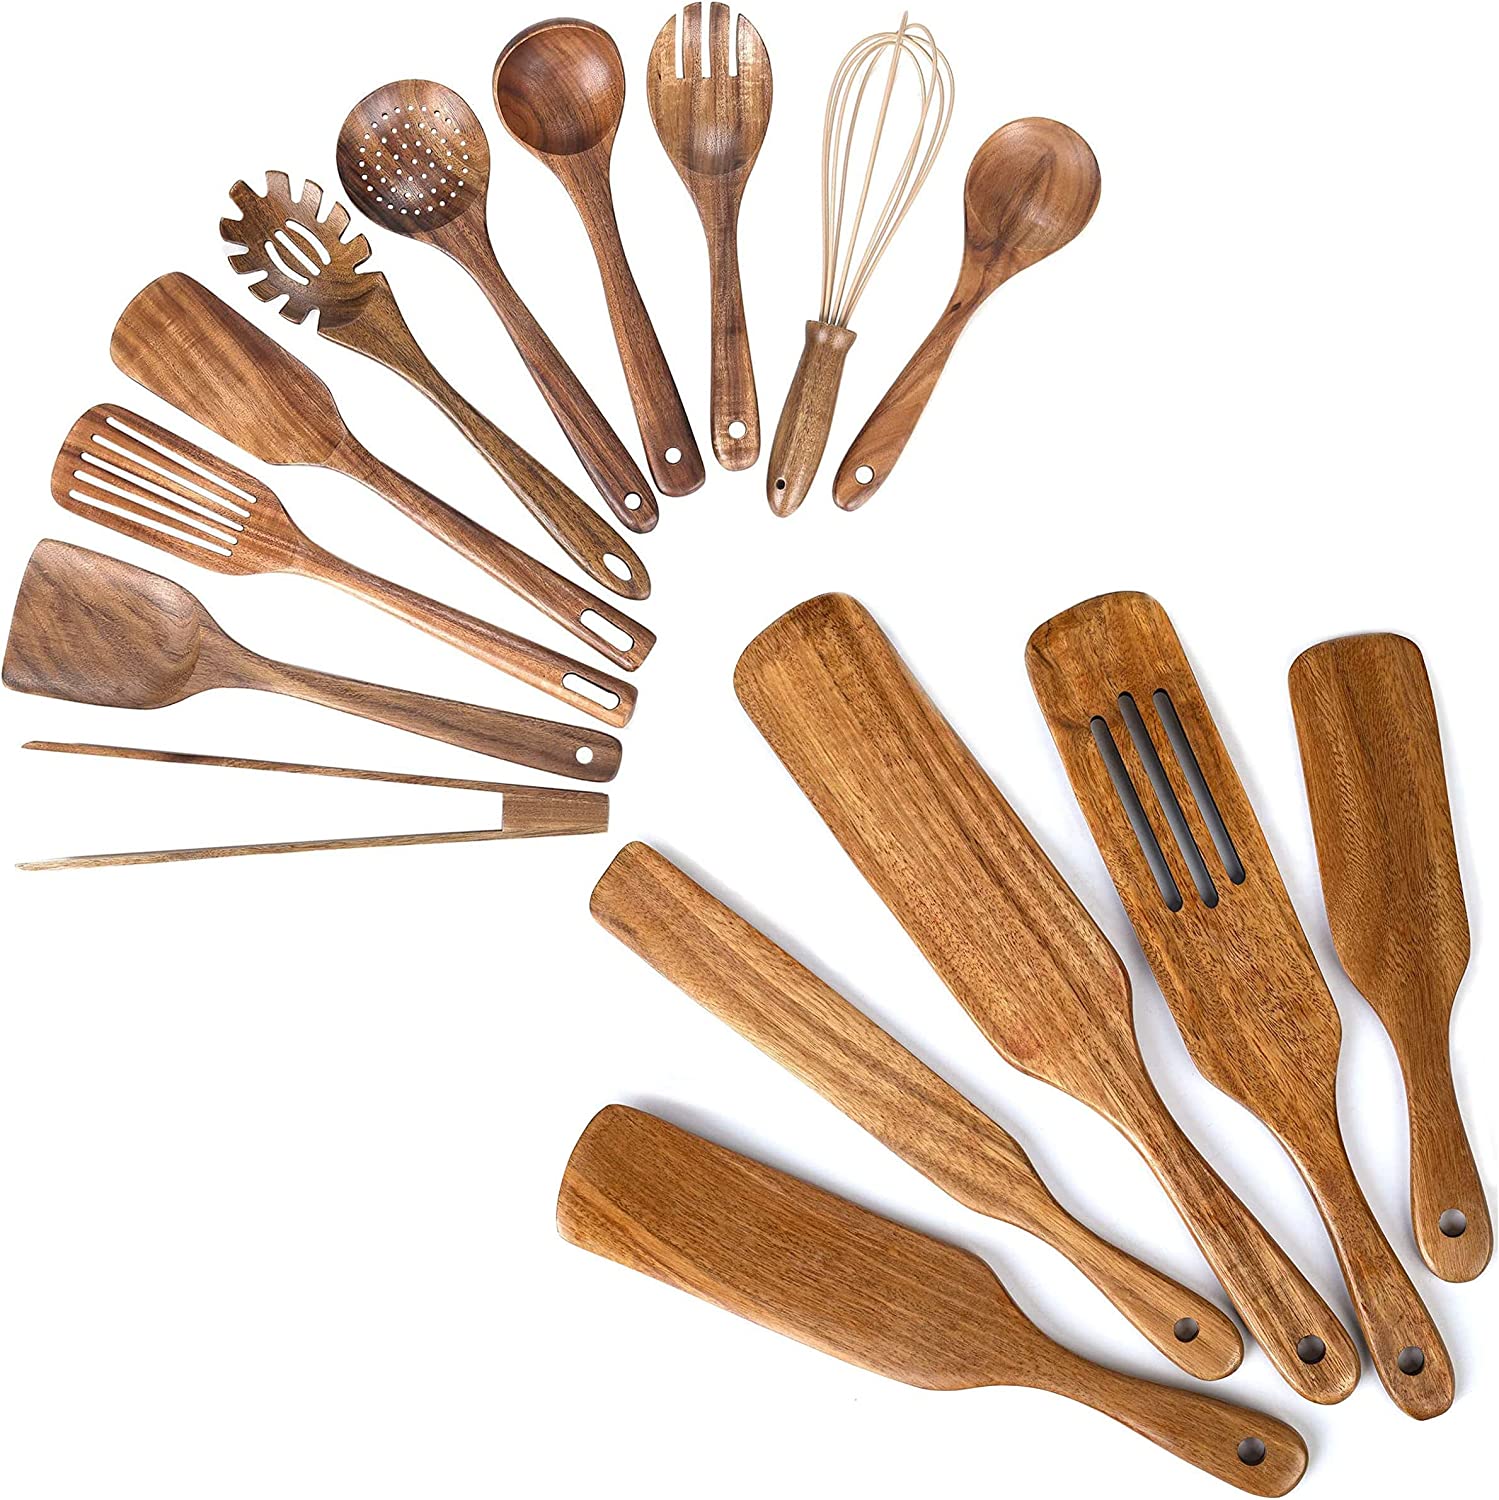 10 Pack Wooden Spoons Set + 5 Pack Wooden Spurtles Set Wood Kitchen Cooking Nonstick Utensil Set